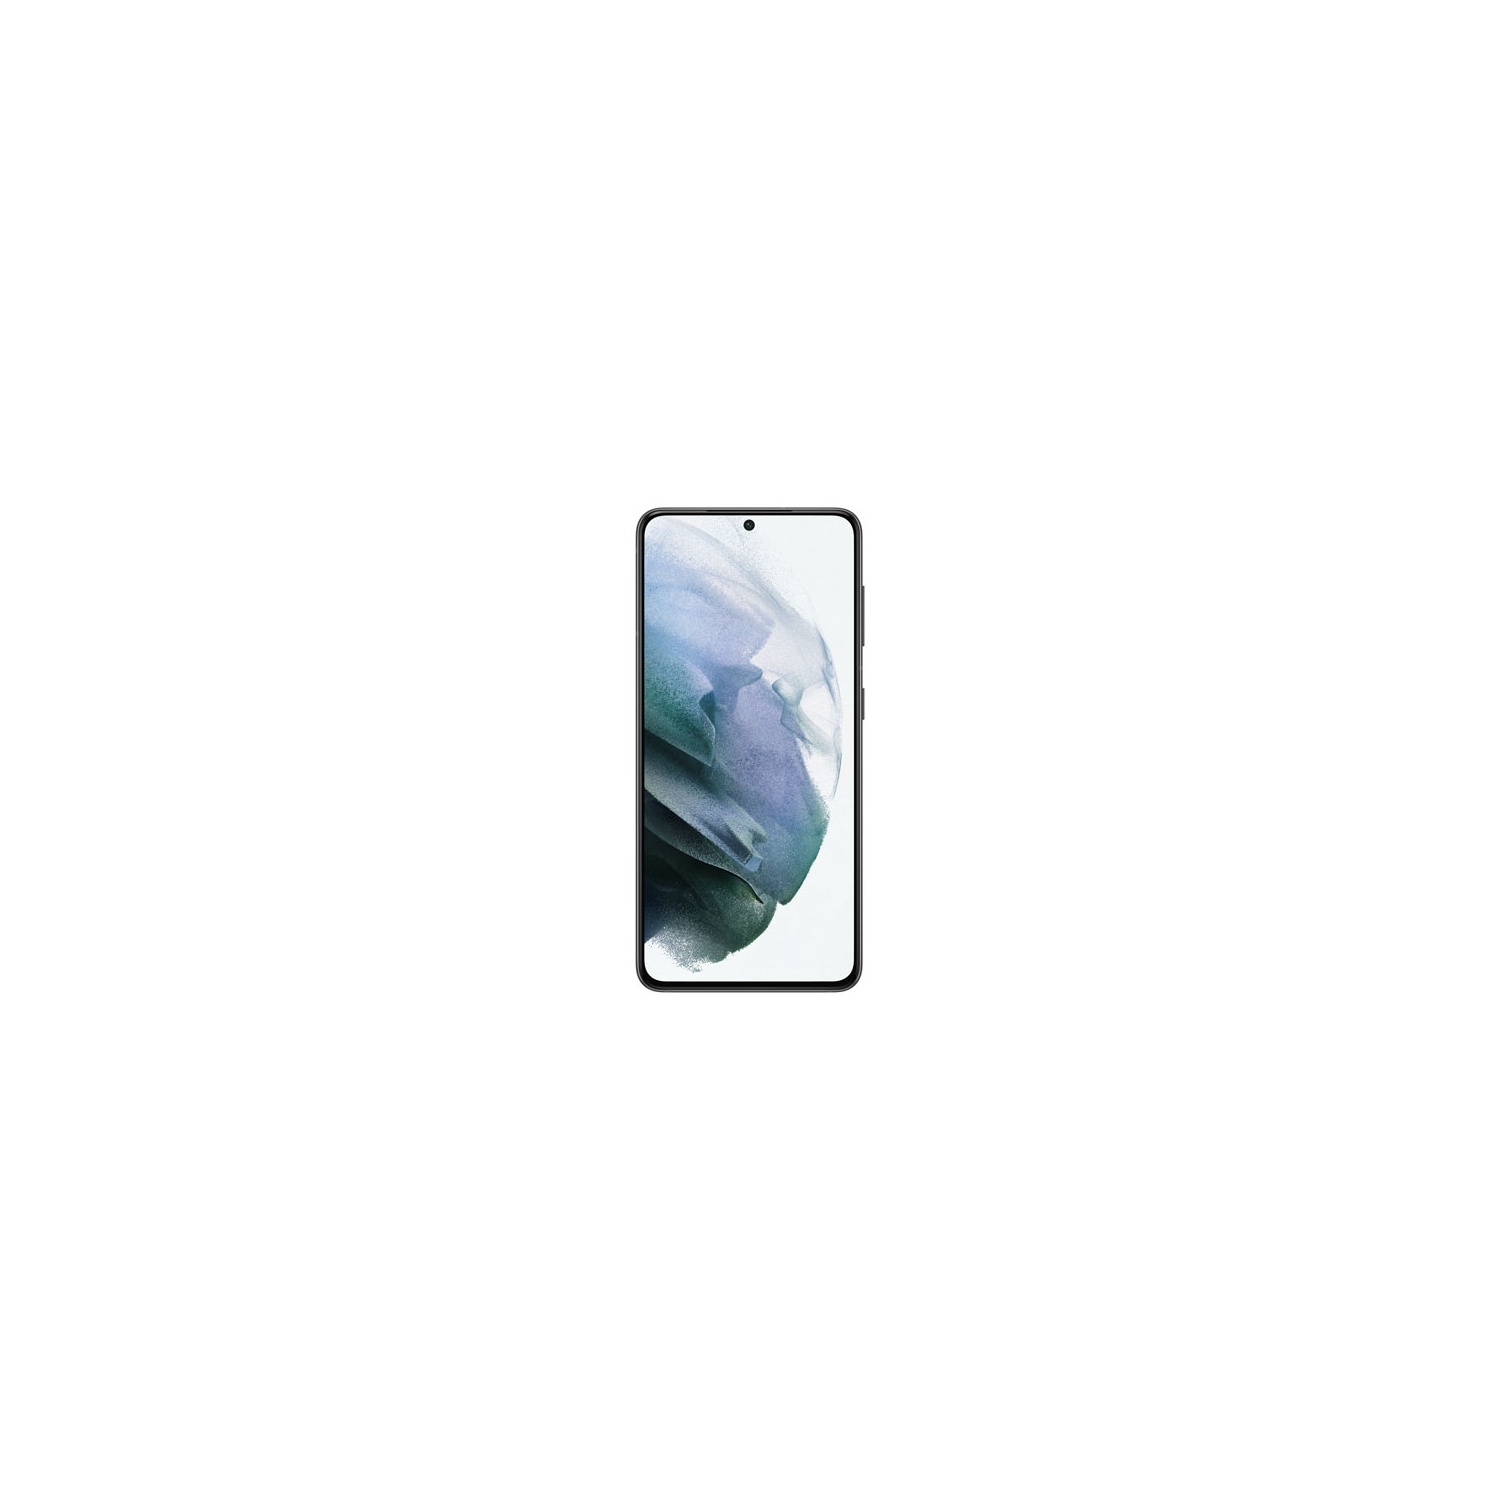 Refurbished (Good) - Samsung Galaxy S21 5G 128GB - Phantom Grey - Unlocked